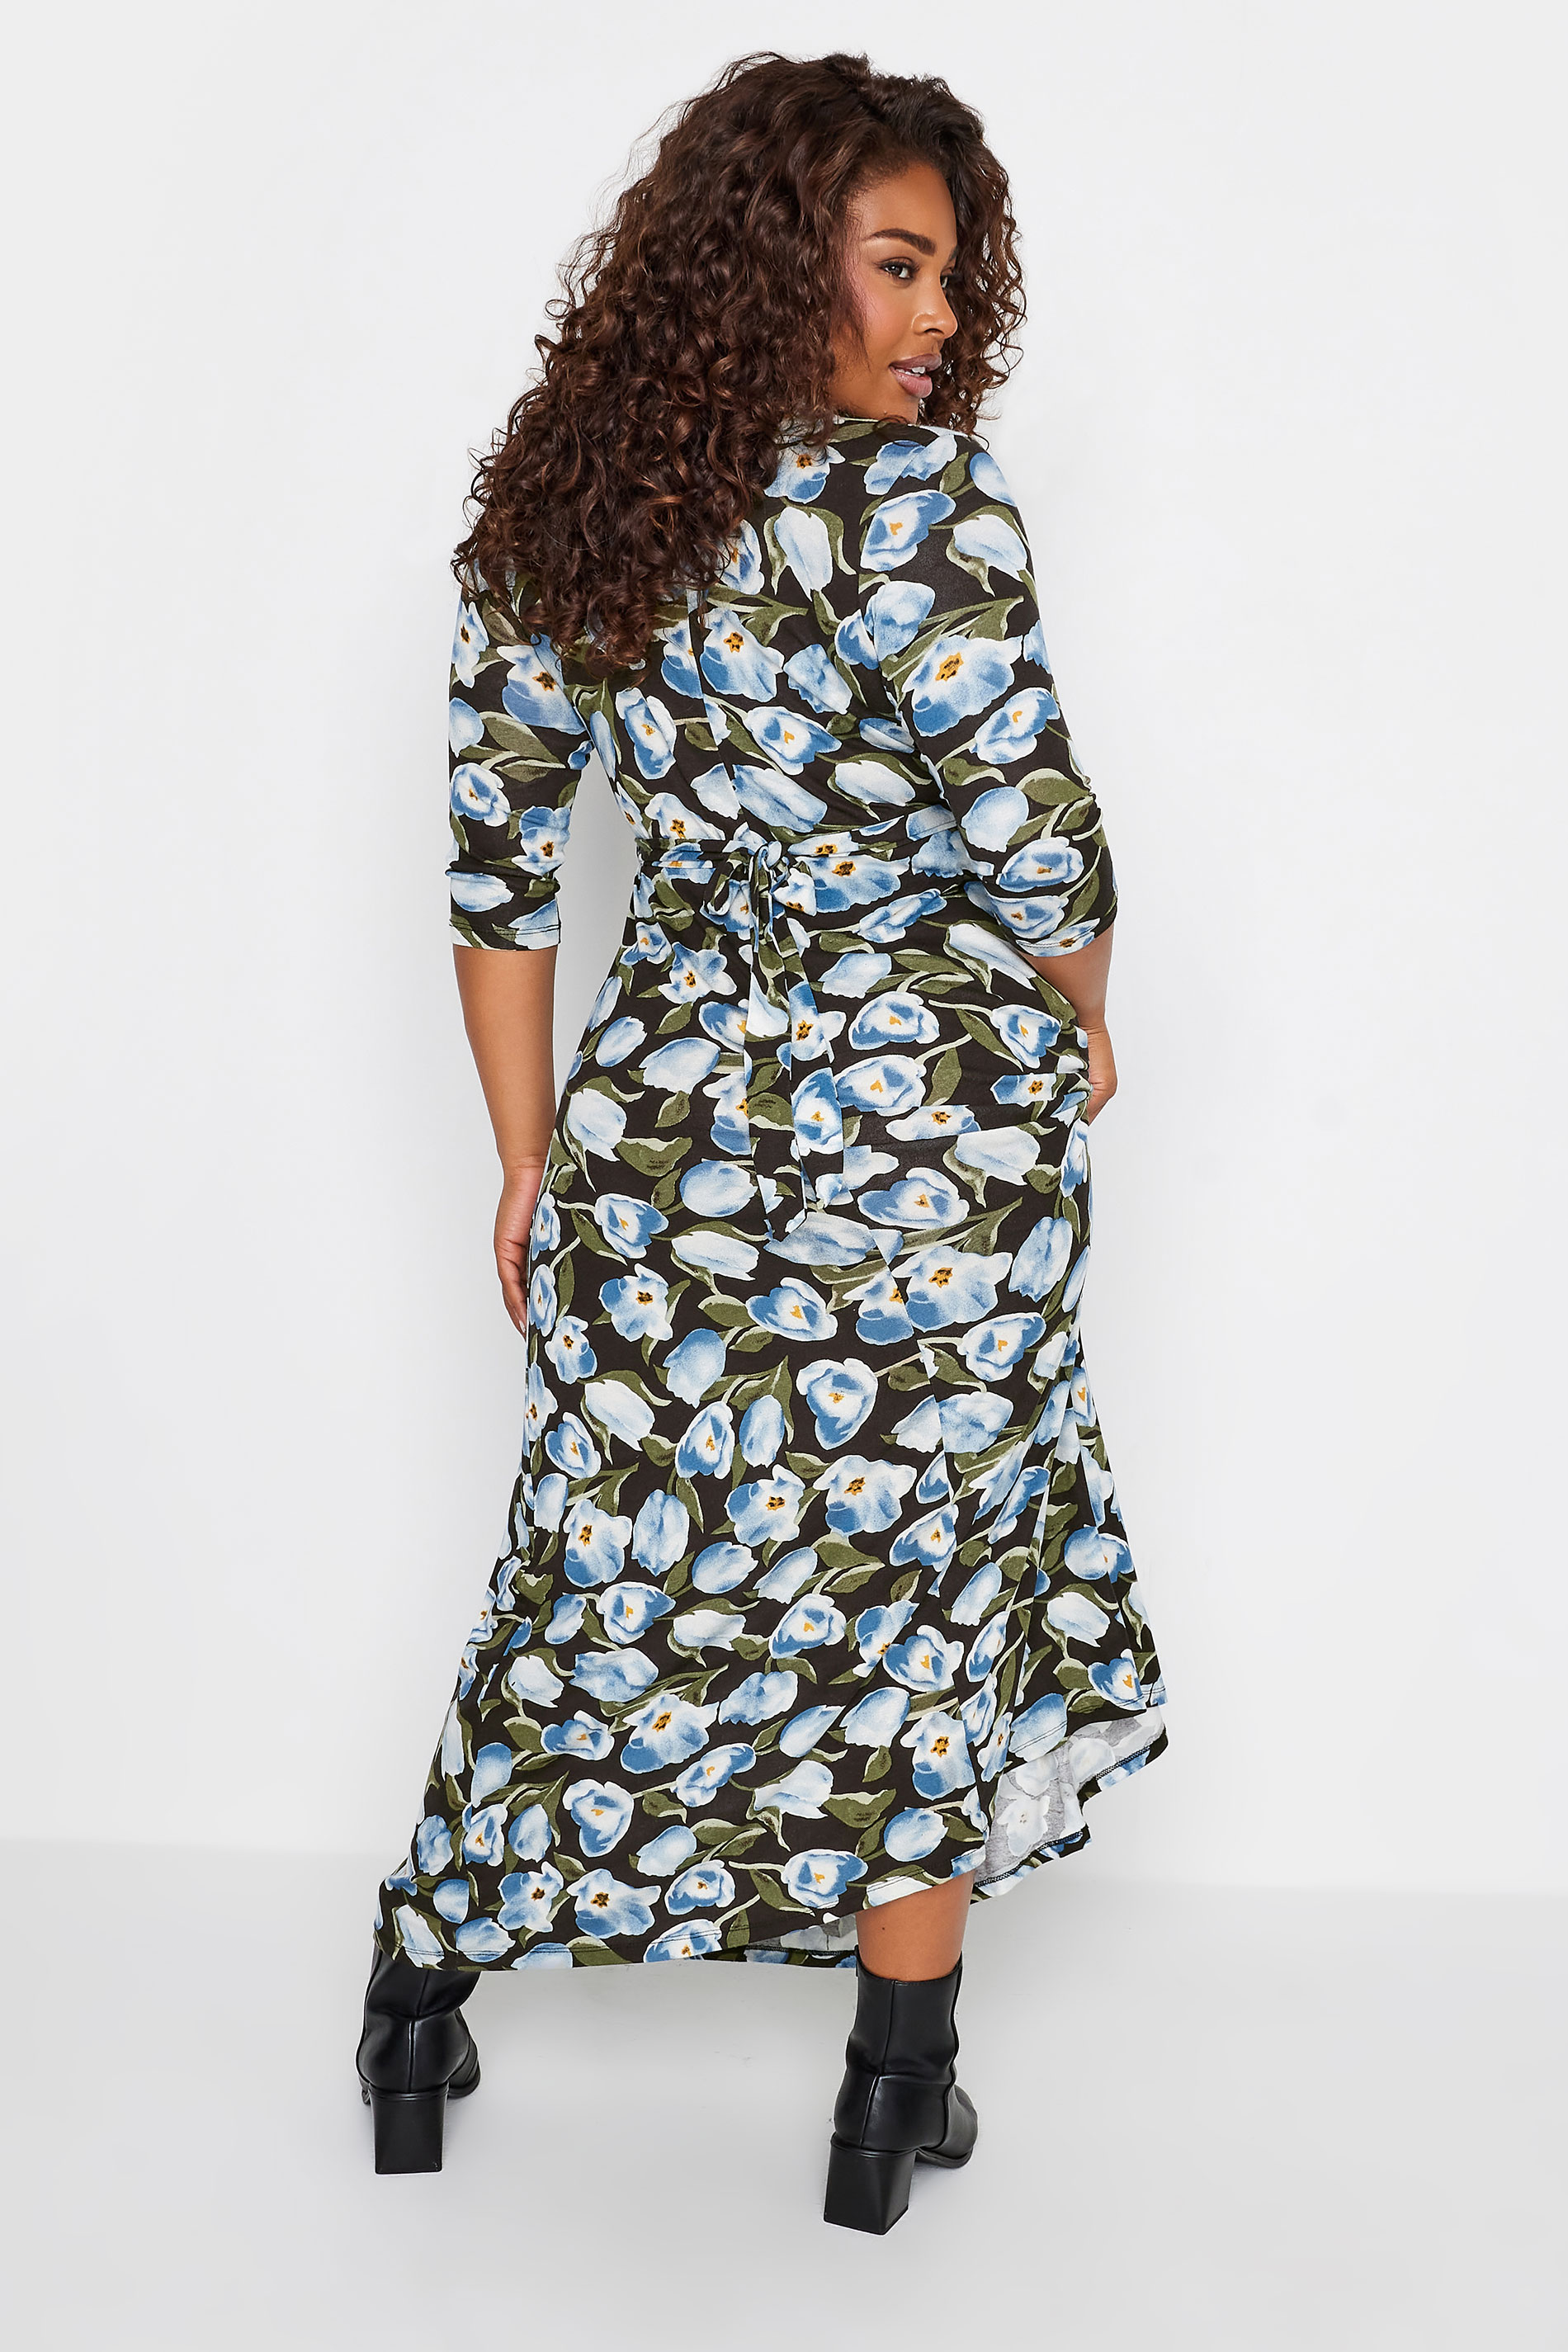 YOURS Plus Size Black Floral Print Maxi Wrap Dress | Yours Clothing 3